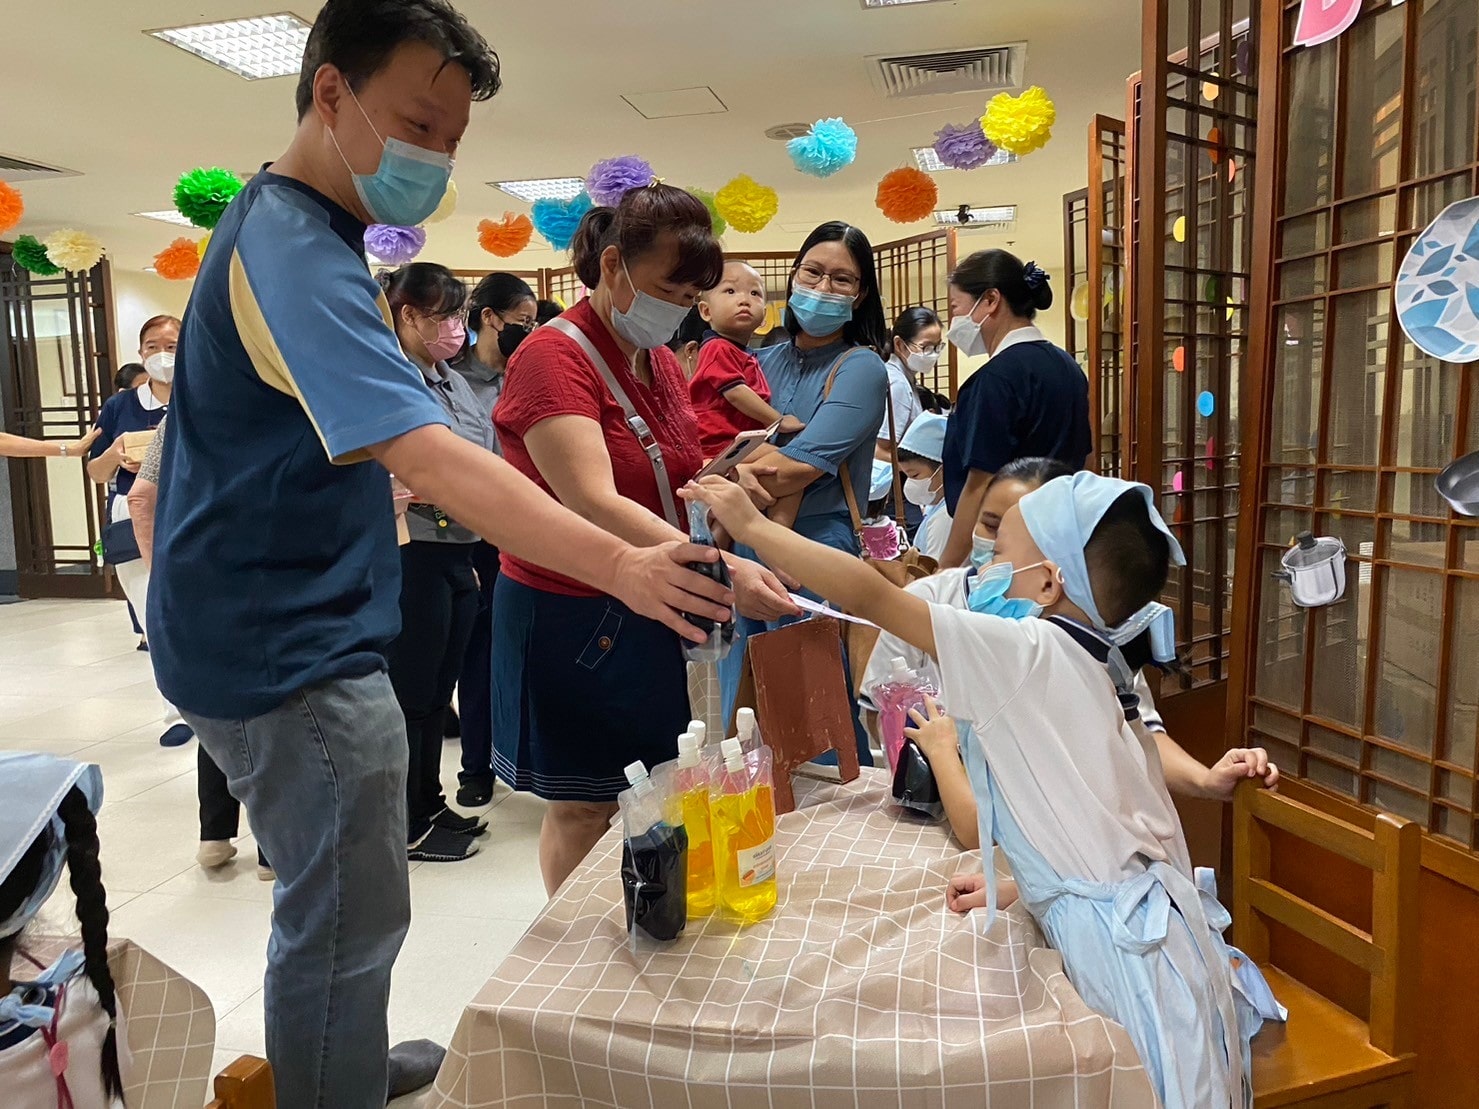 Parent Jun Dy is happy and proud to support the preschool’s kiddie market.【Photo by Matt Serrano】